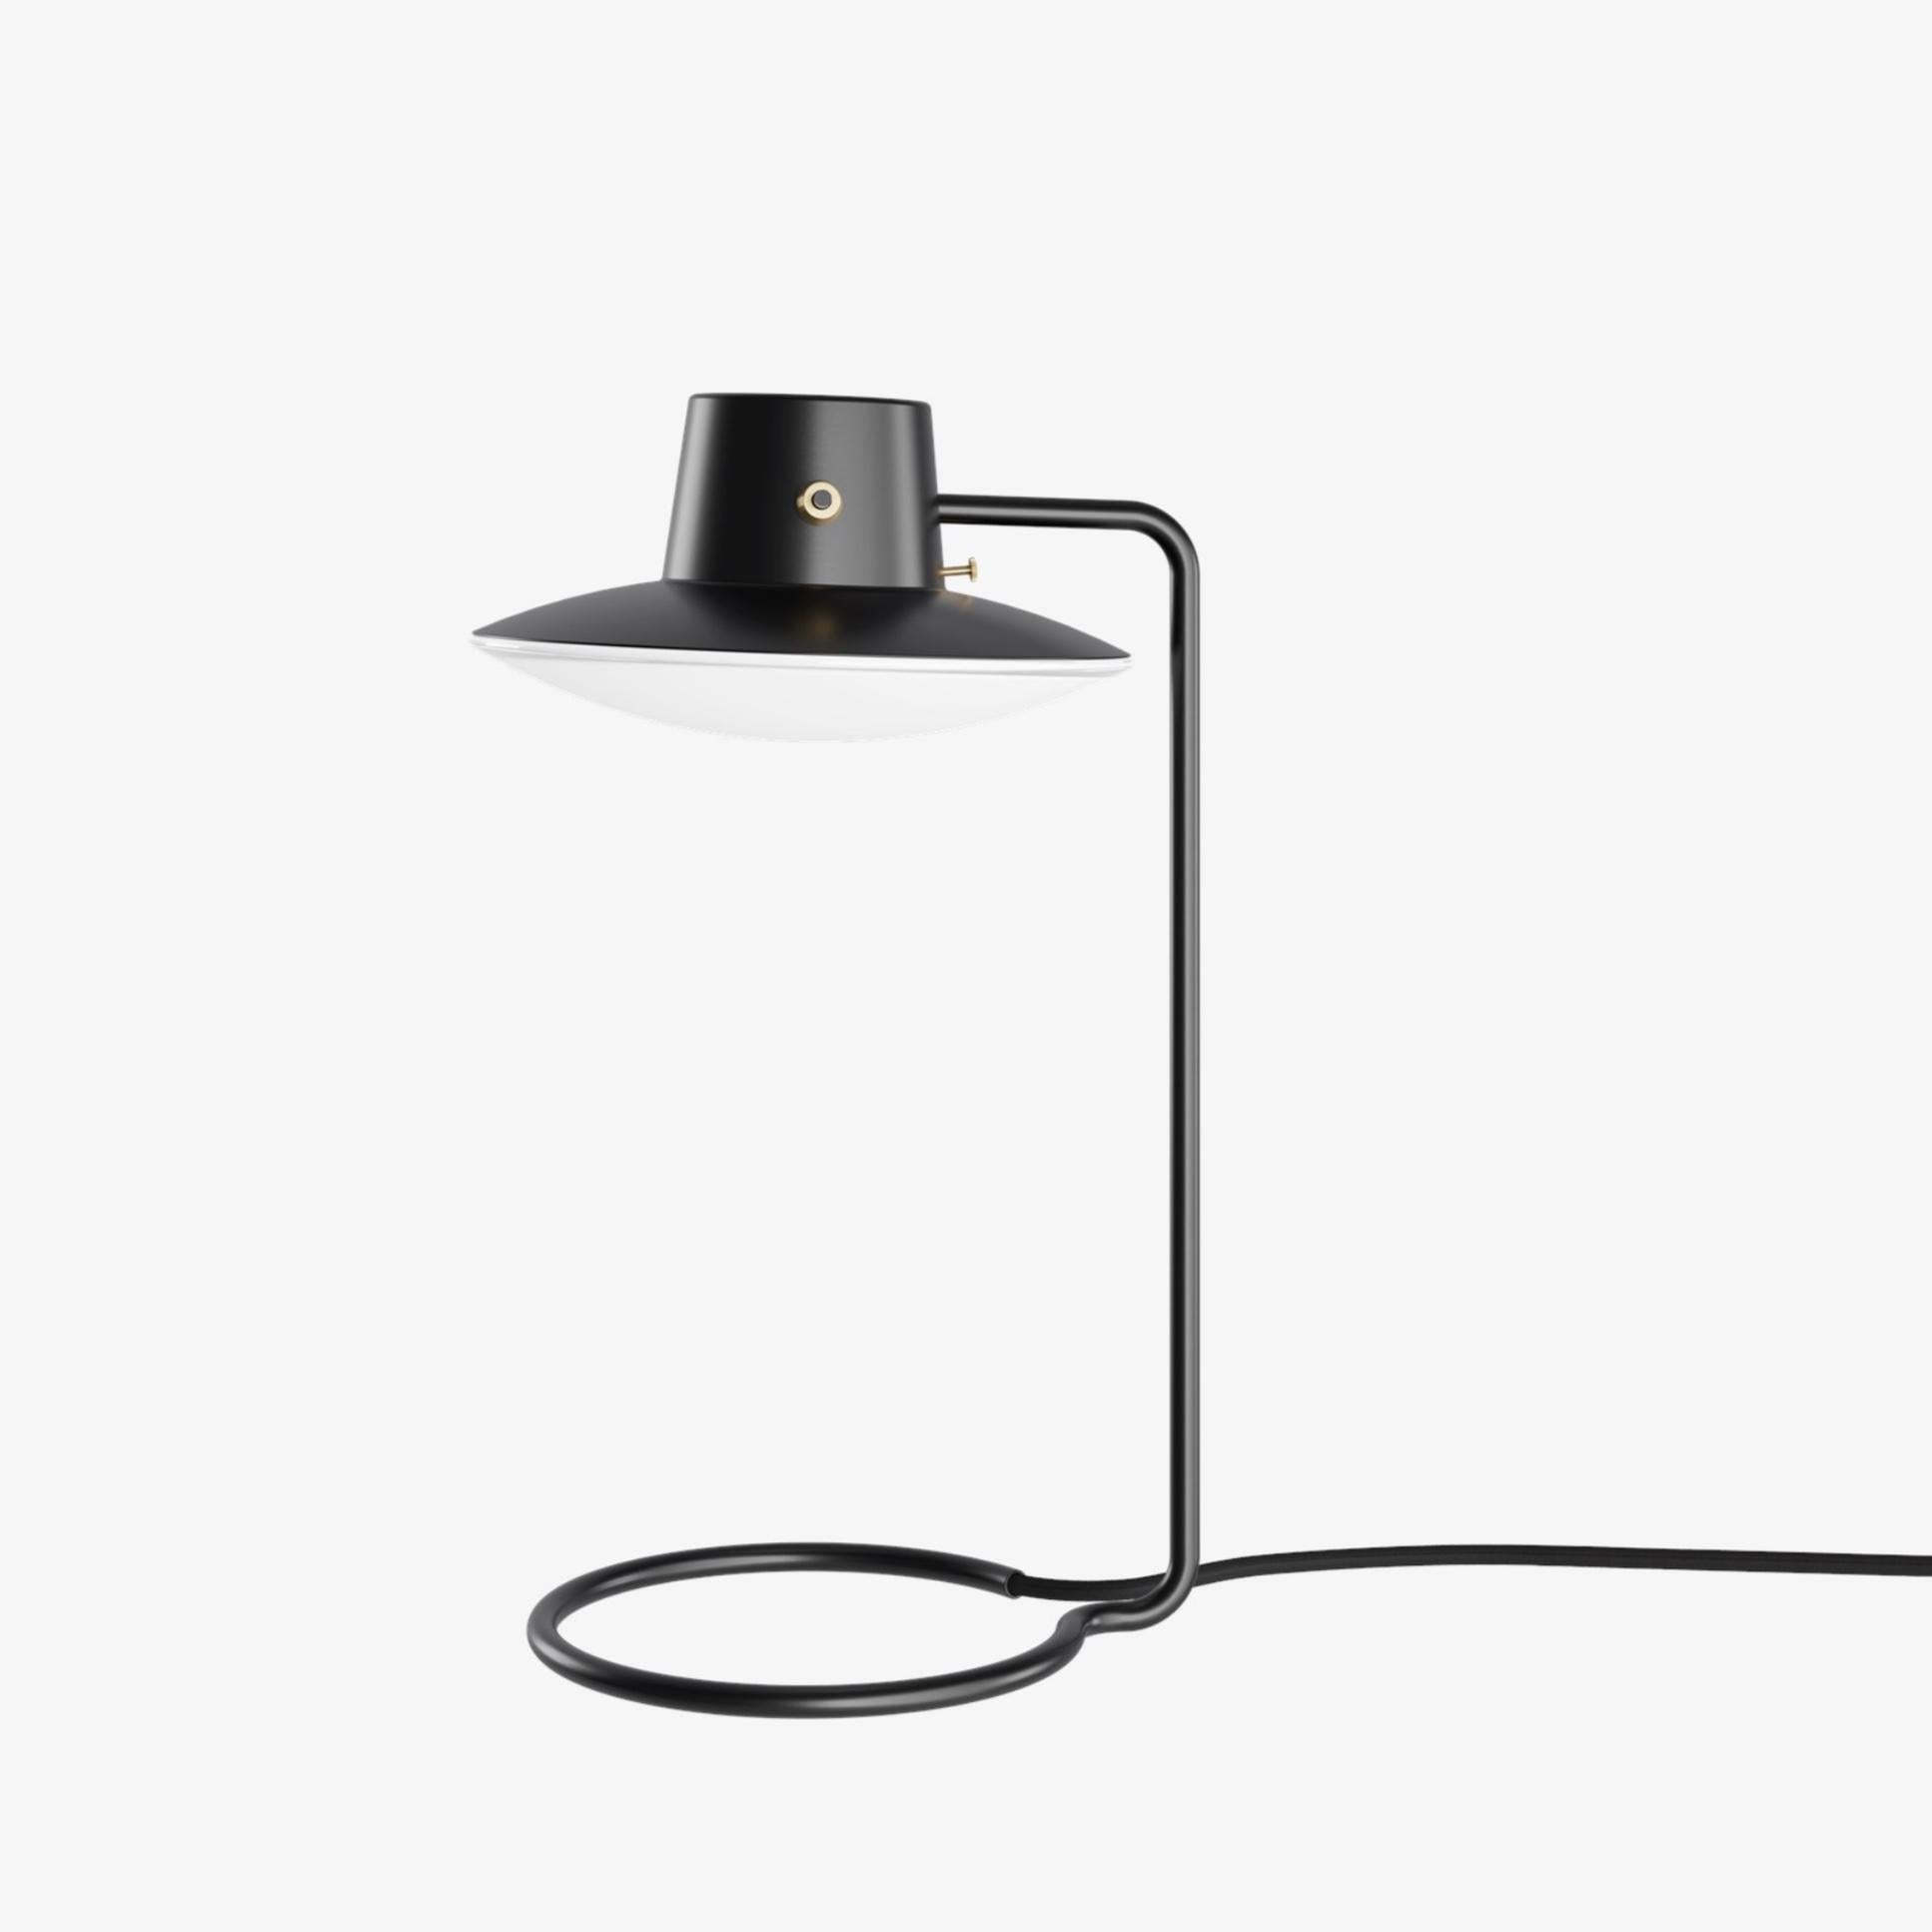 Arne Jacobsen AJ Oxford Pin Table Lamp in Opaline Glass for Louis Poulsen 1963 For Sale 2